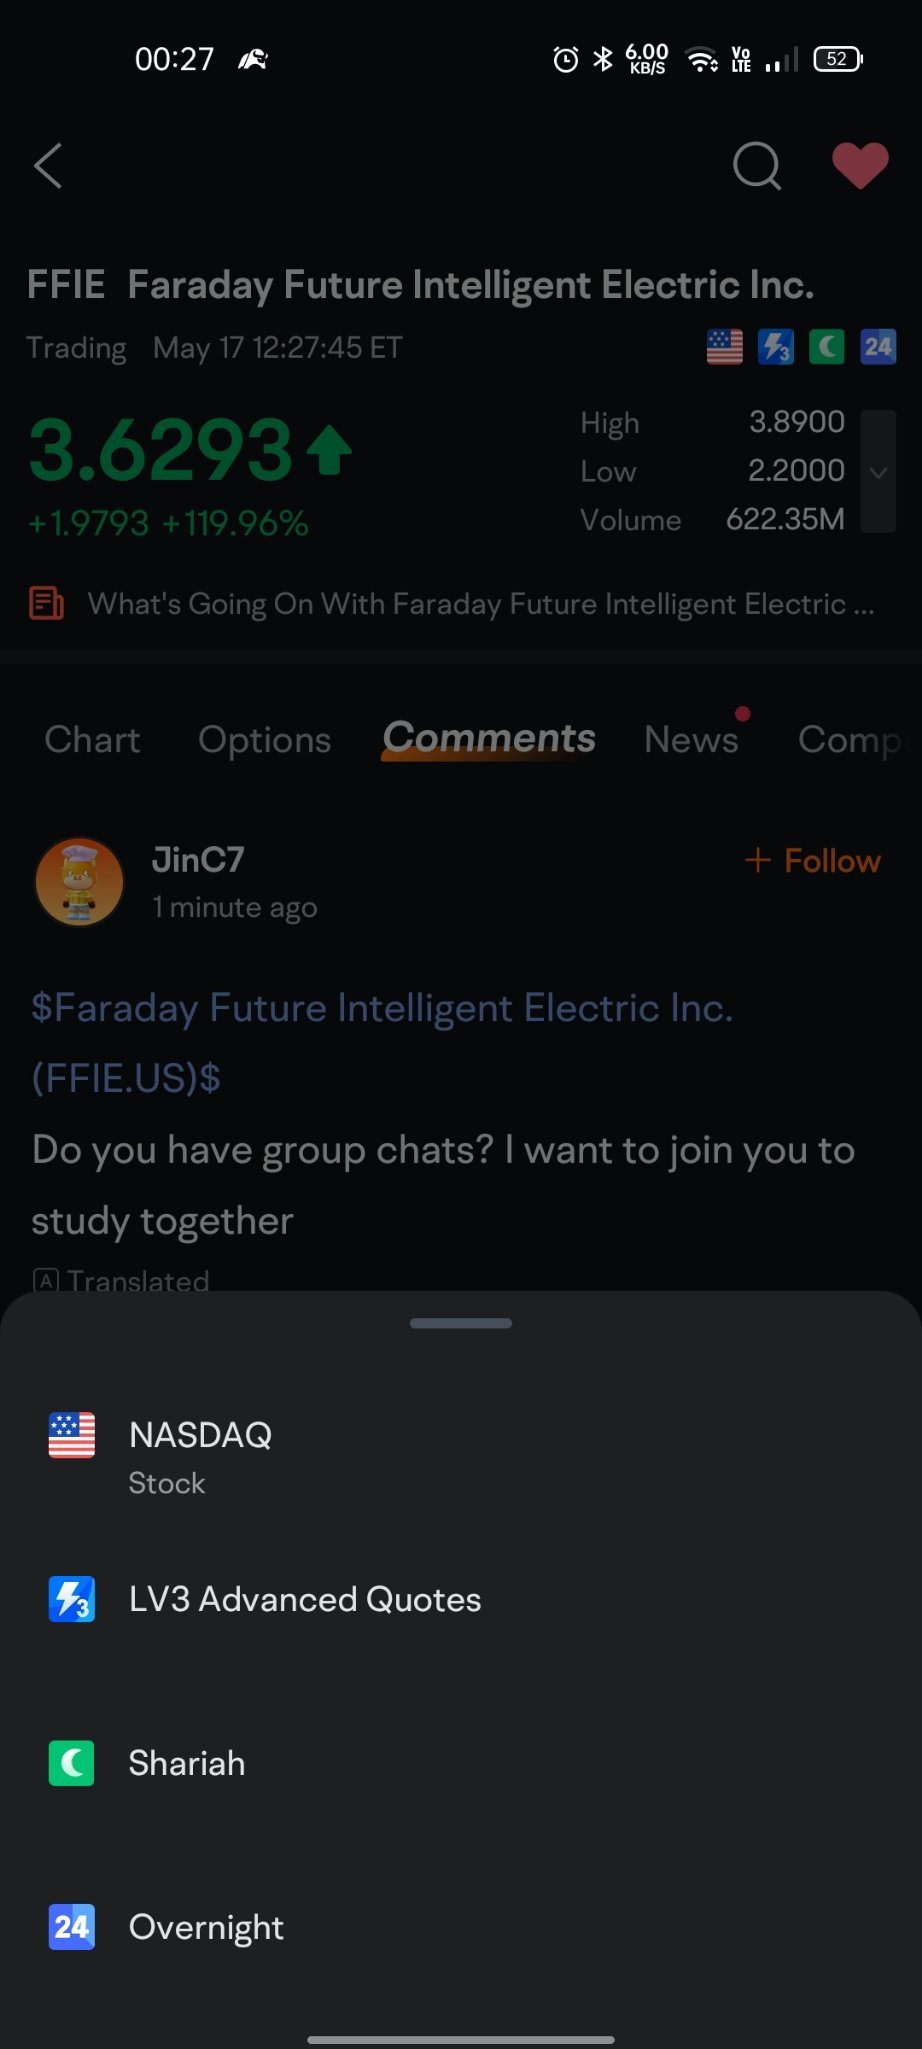 $Faraday Future Intelligent Electric Inc. (FFIE.US)$ 有人解釋這個嗎？為什麼要過夜交易？